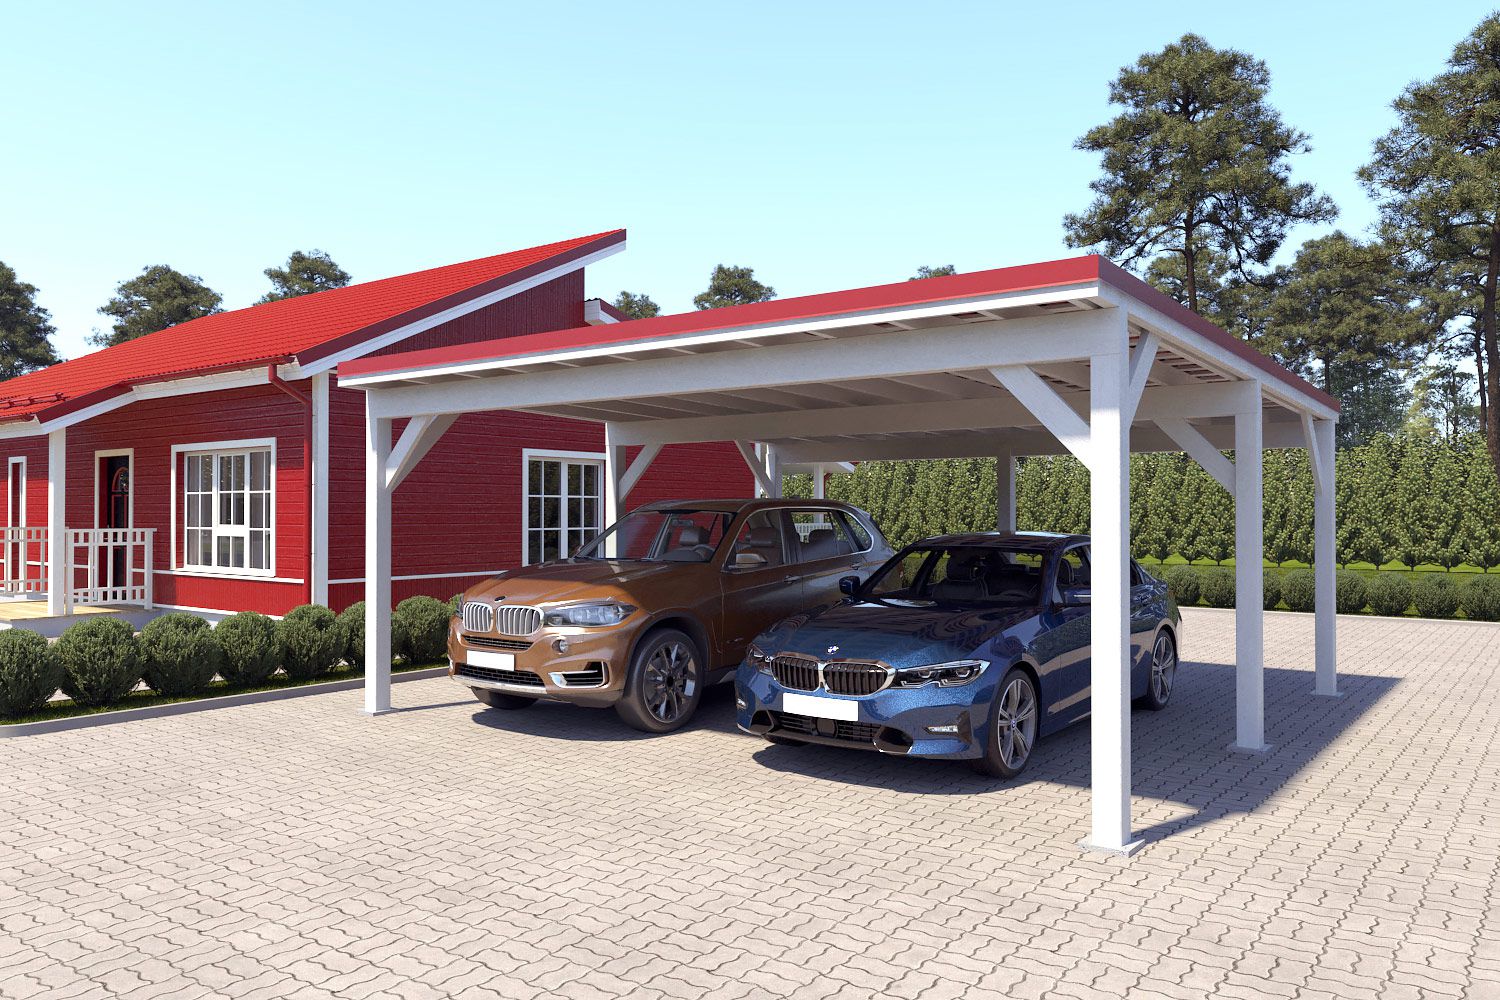 Dubbele carport "Stable" 6 x 6 m (LxB) / 250 kg/m² dak belasting / 36 m² / sneeuwwit met rood dak